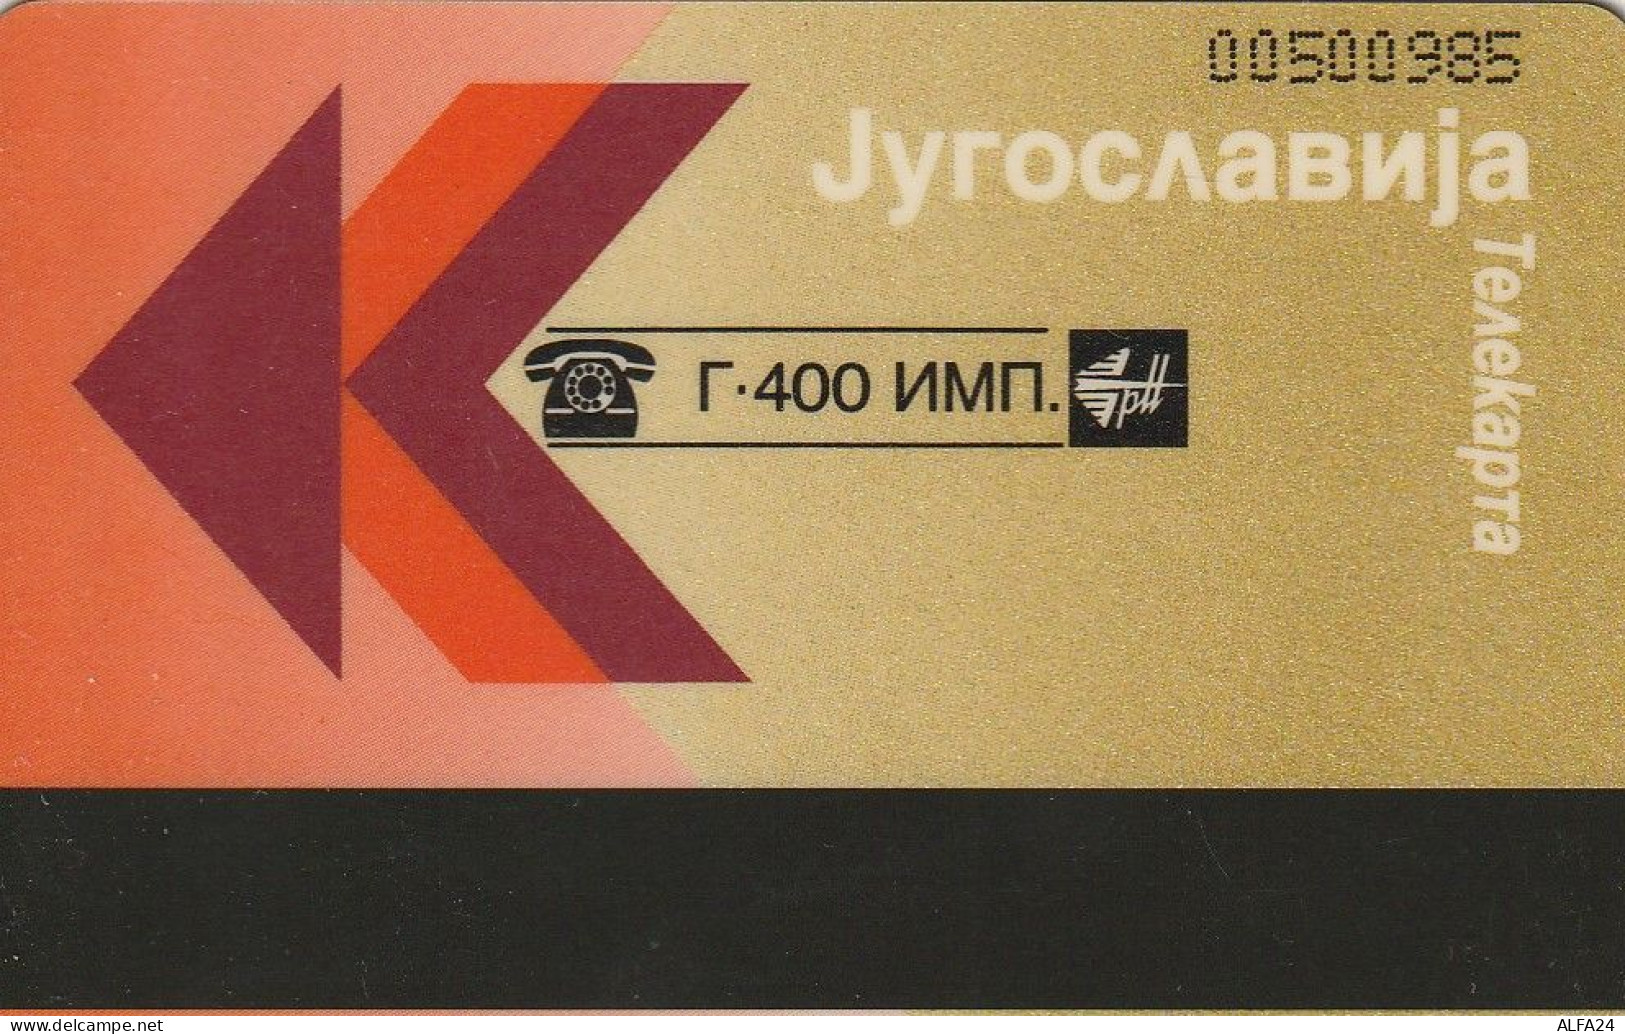 PHONE CARD JUGOSLAVIA  (E59.11.3 - Jugoslavia